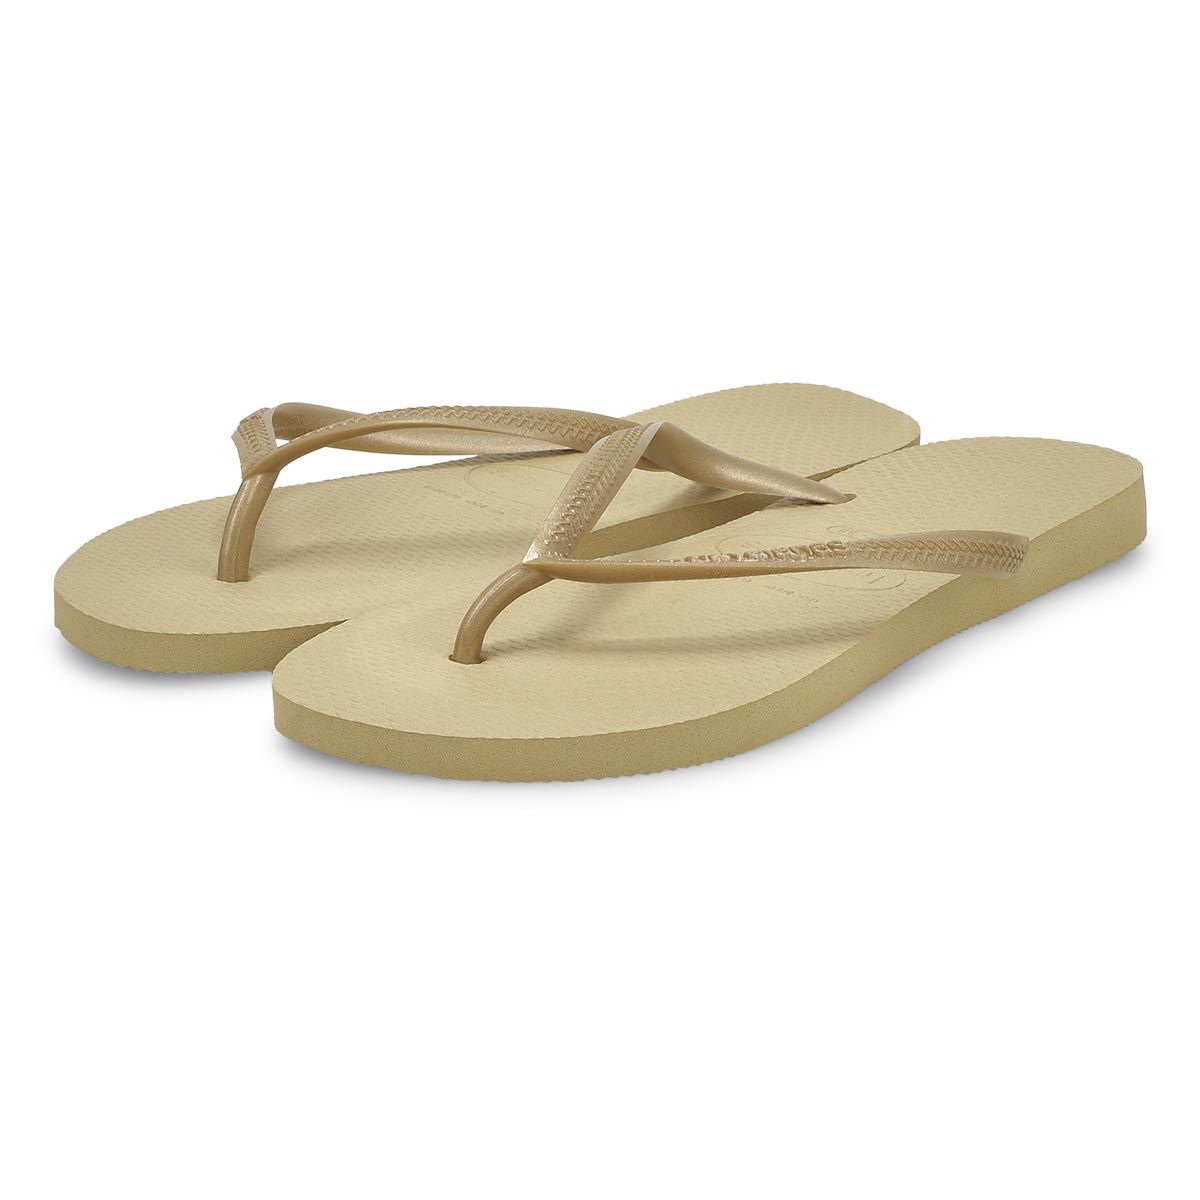 Women's Slim Flip Flop - Sand Grey/Light Golden